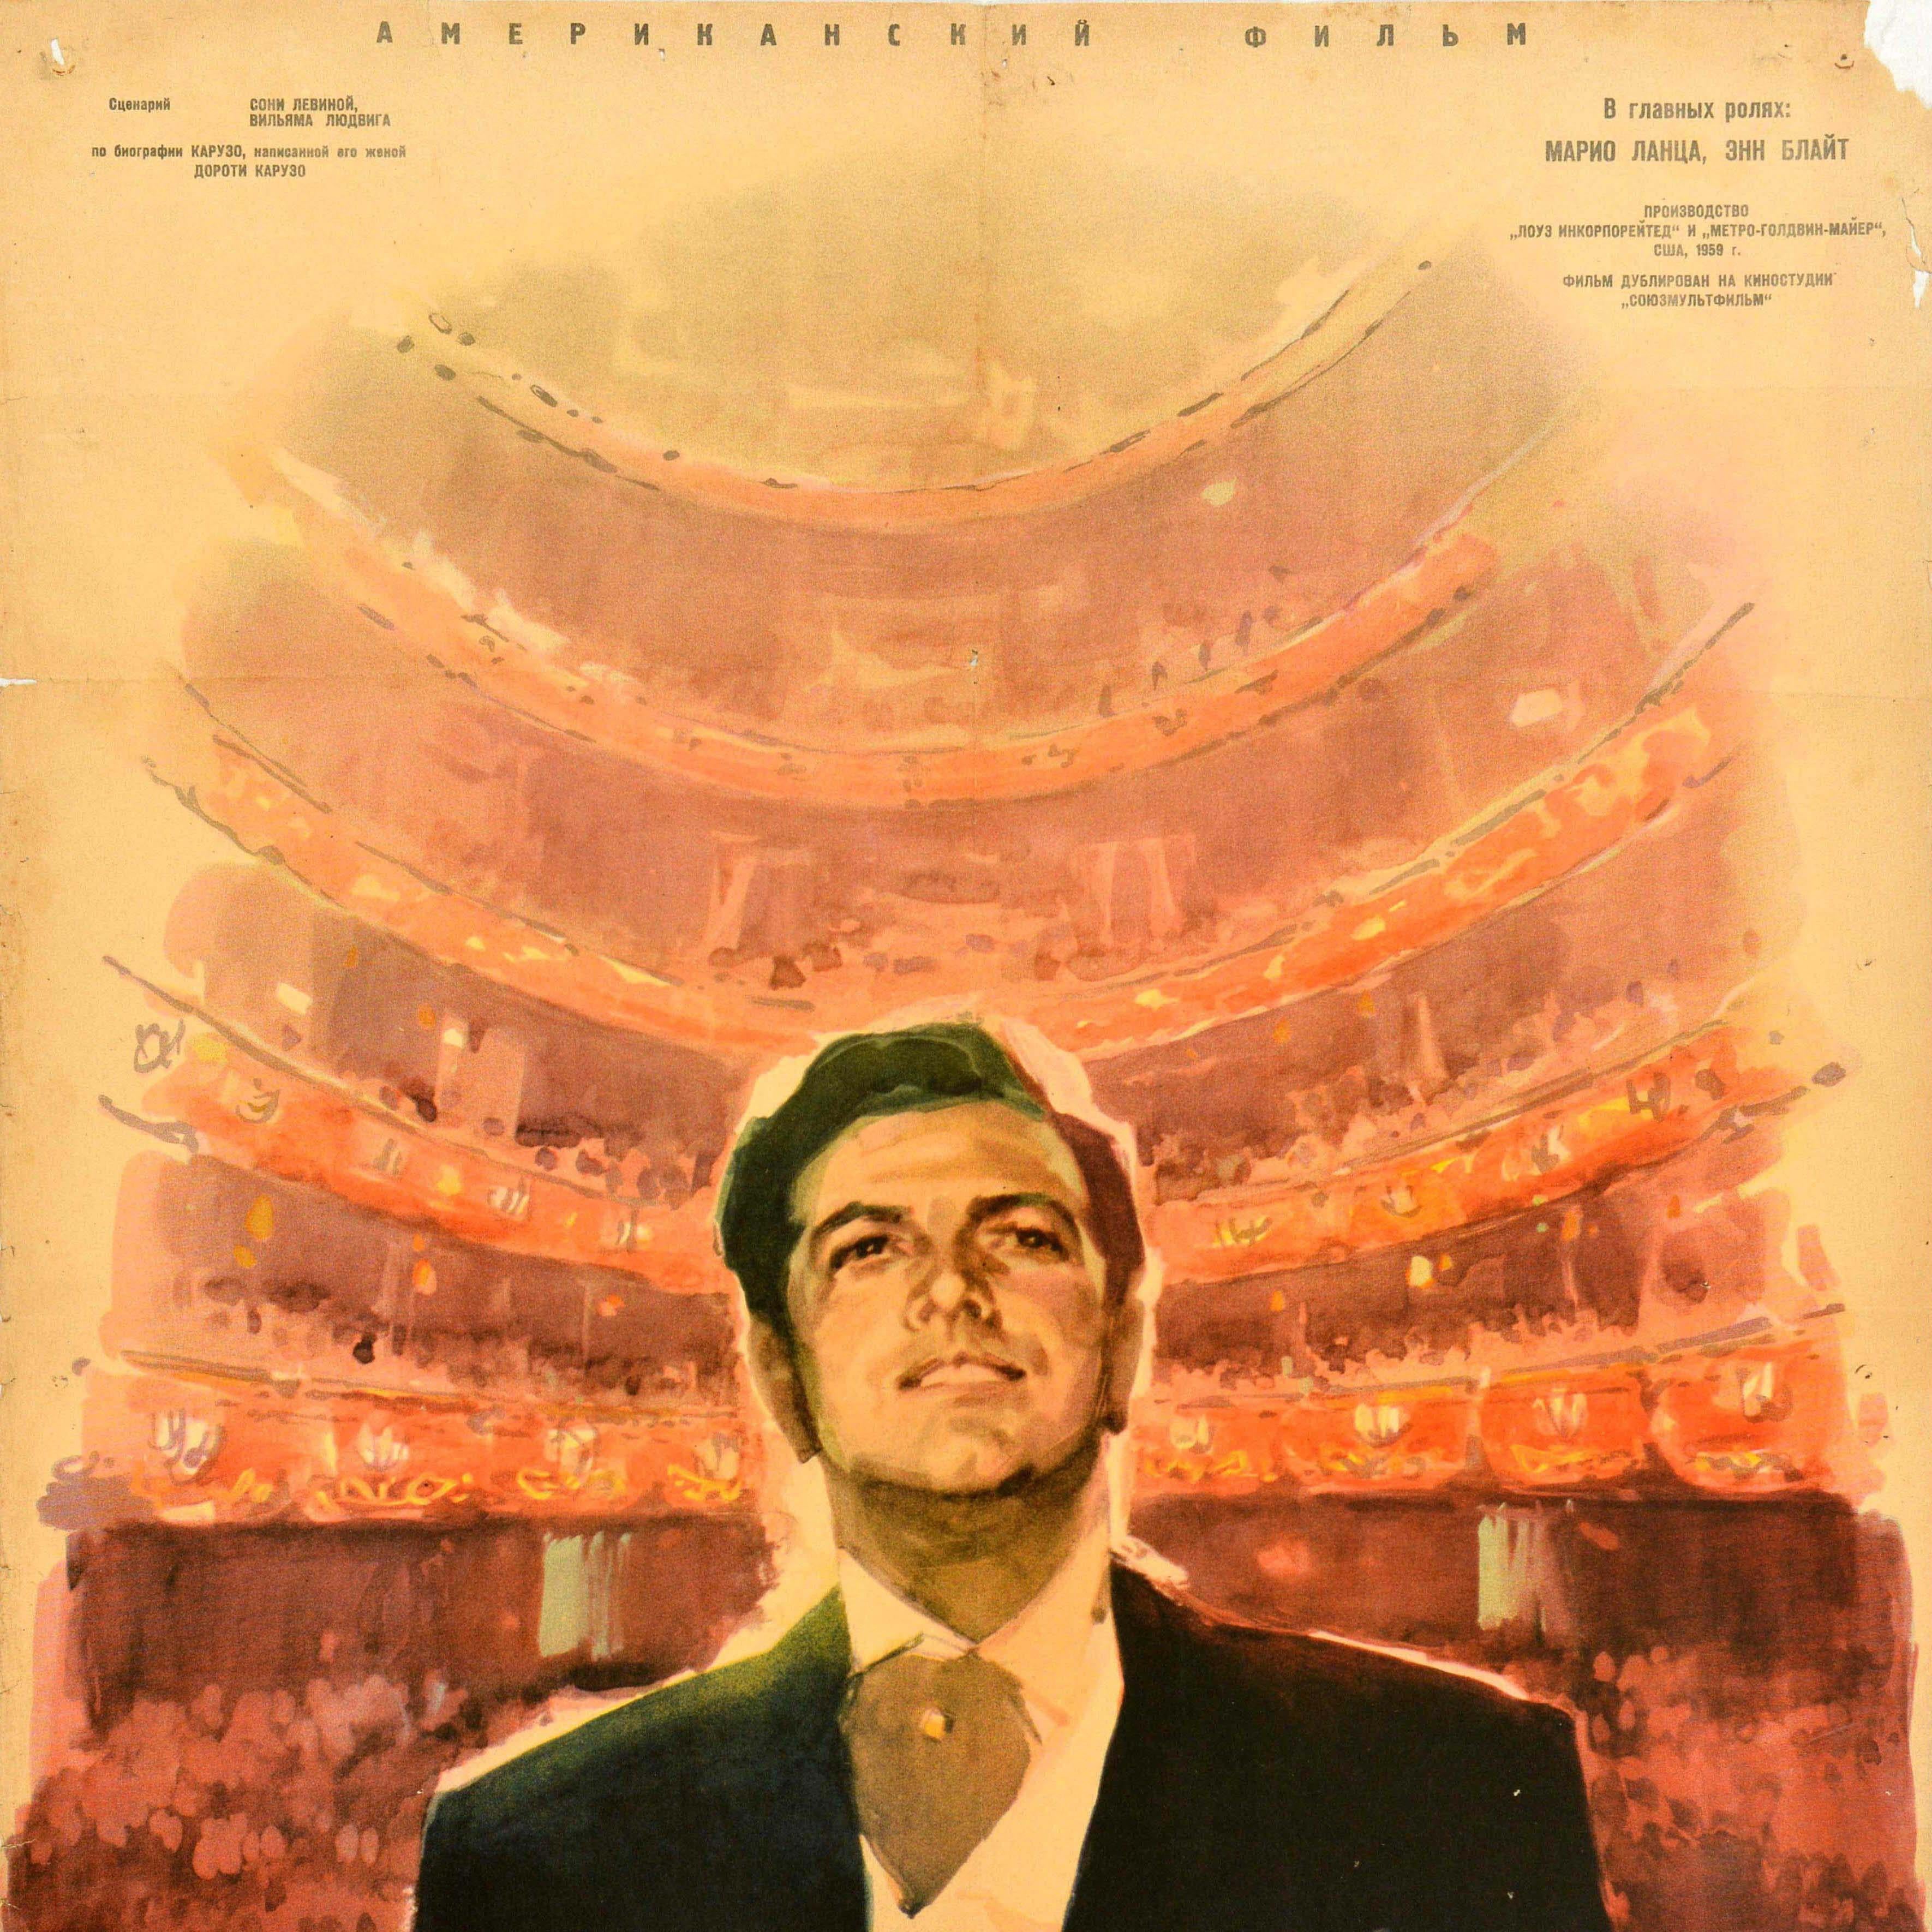 Original Vintage Movie Poster The Great Caruso Mario Lanza Tenor USSR Release - Orange Print by Unknown